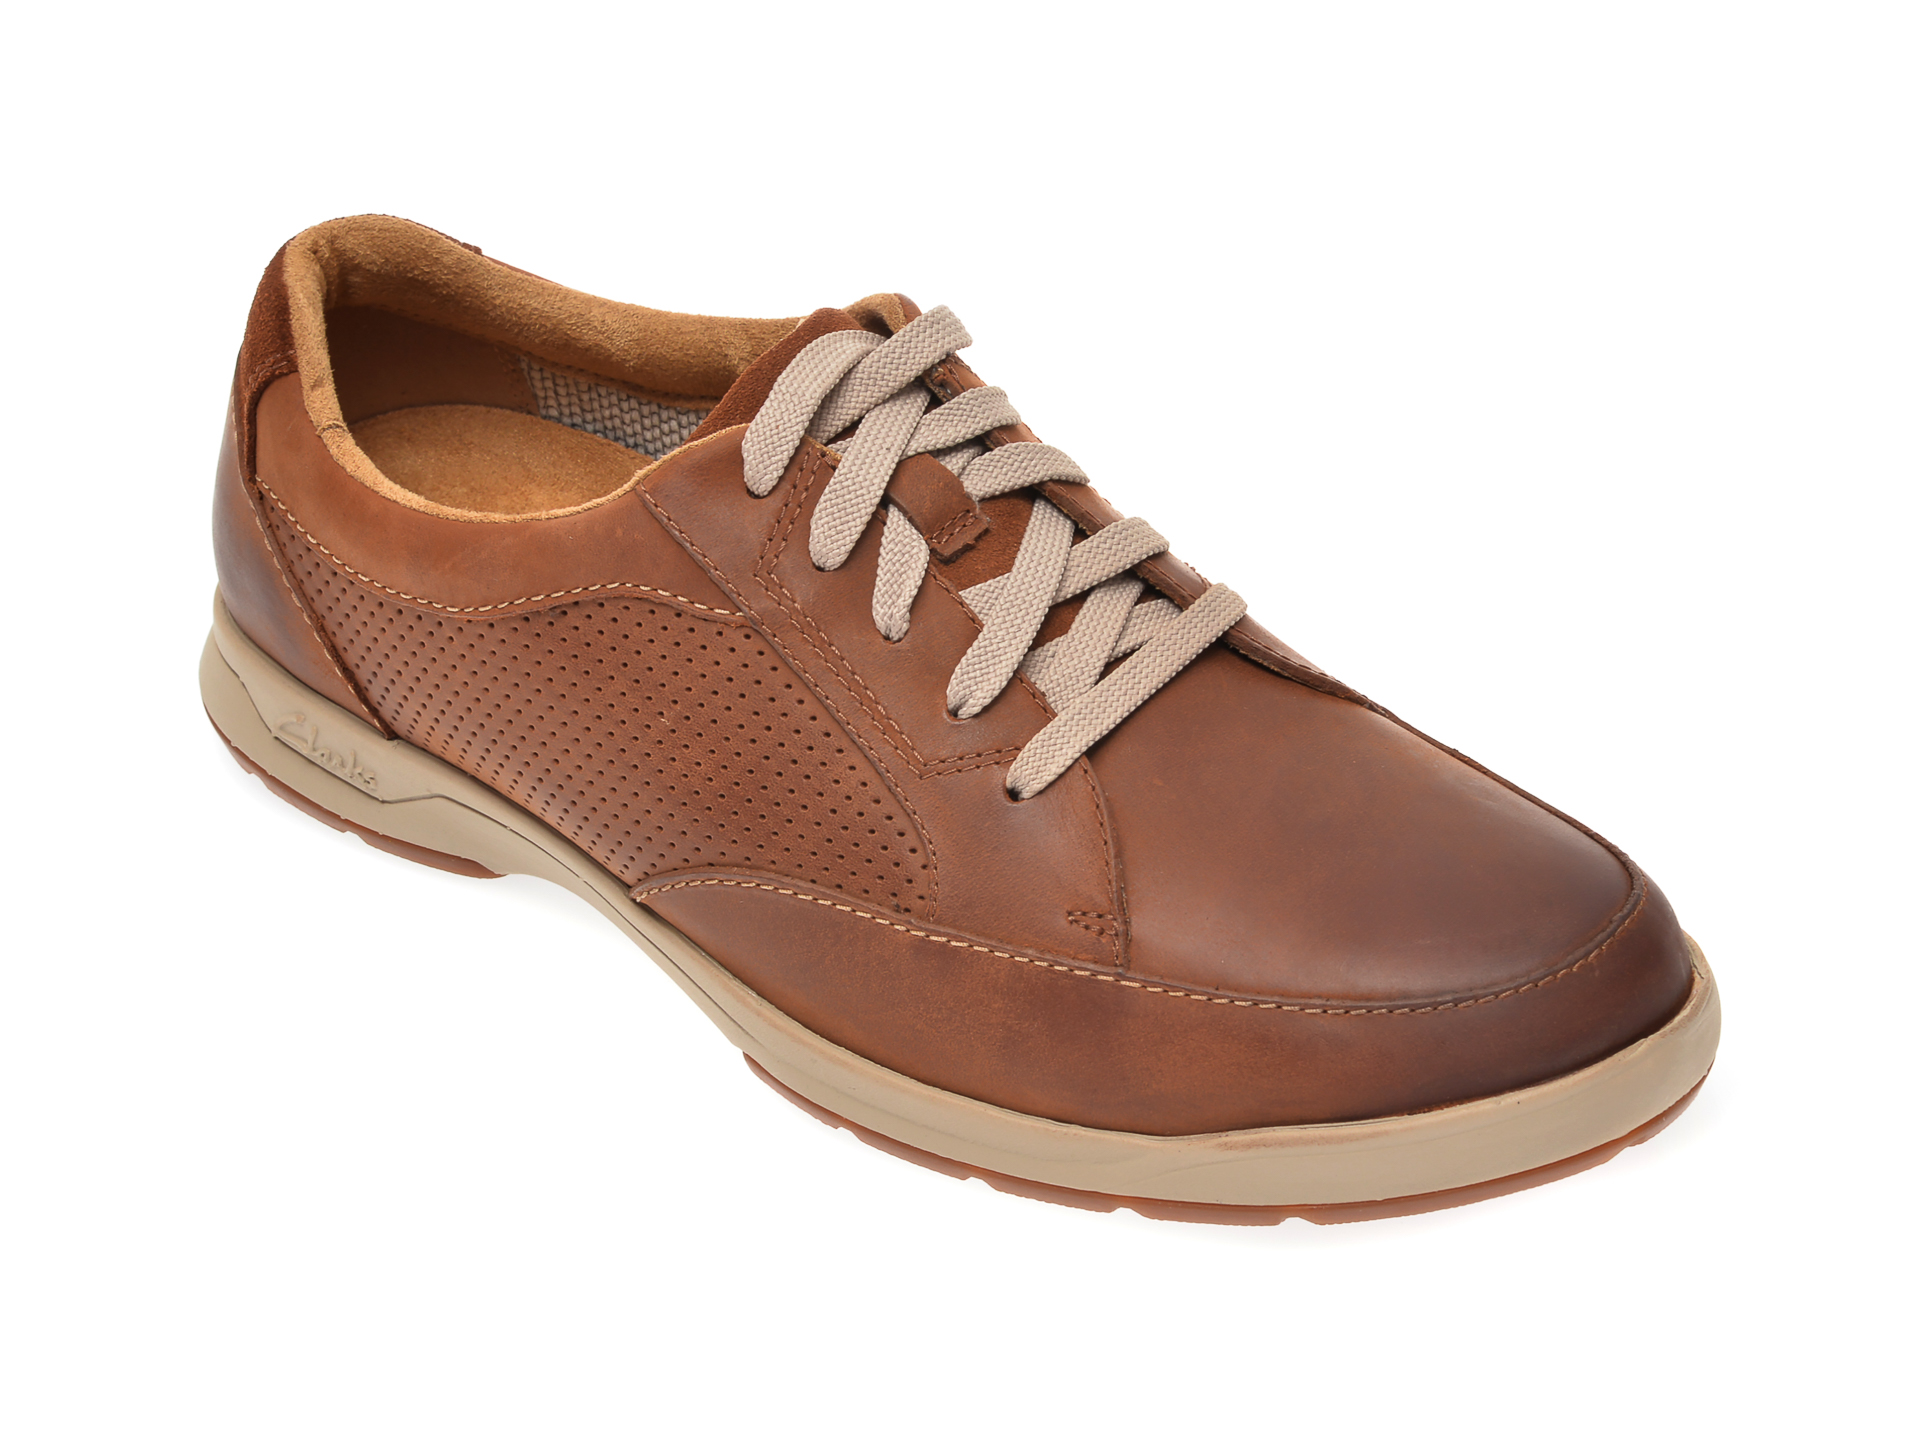 Pantofi CLARKS maro, Stafford Park5, din piele naturala